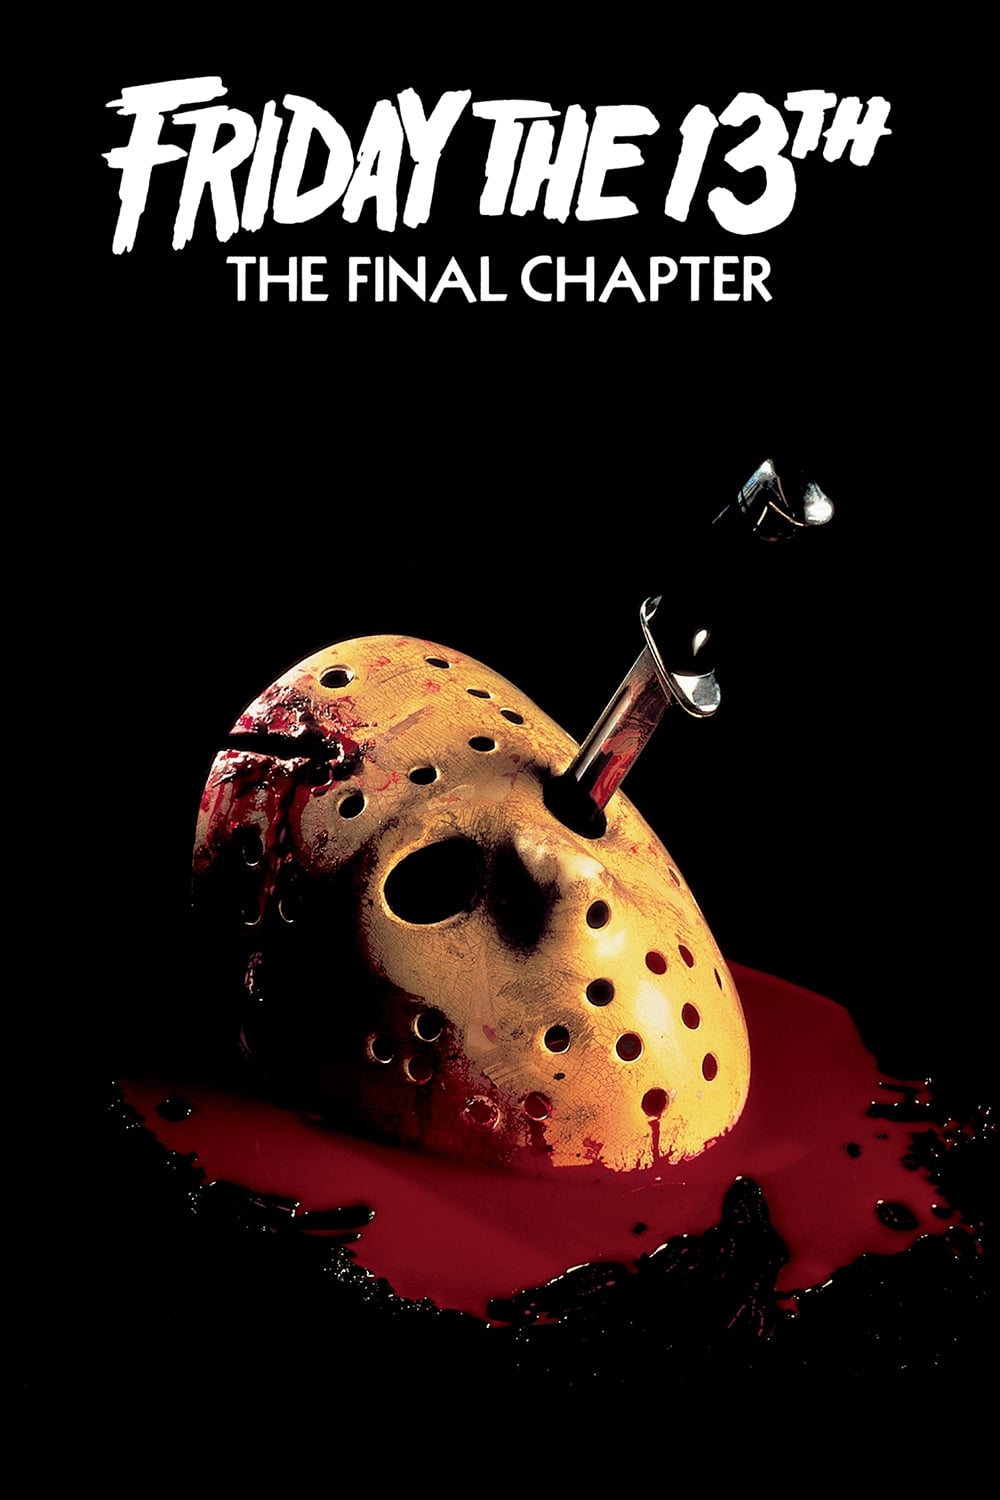 Thứ 6 Ngày 13: Hồi Cuối (Friday the 13th: The Final Chapter) [1984]